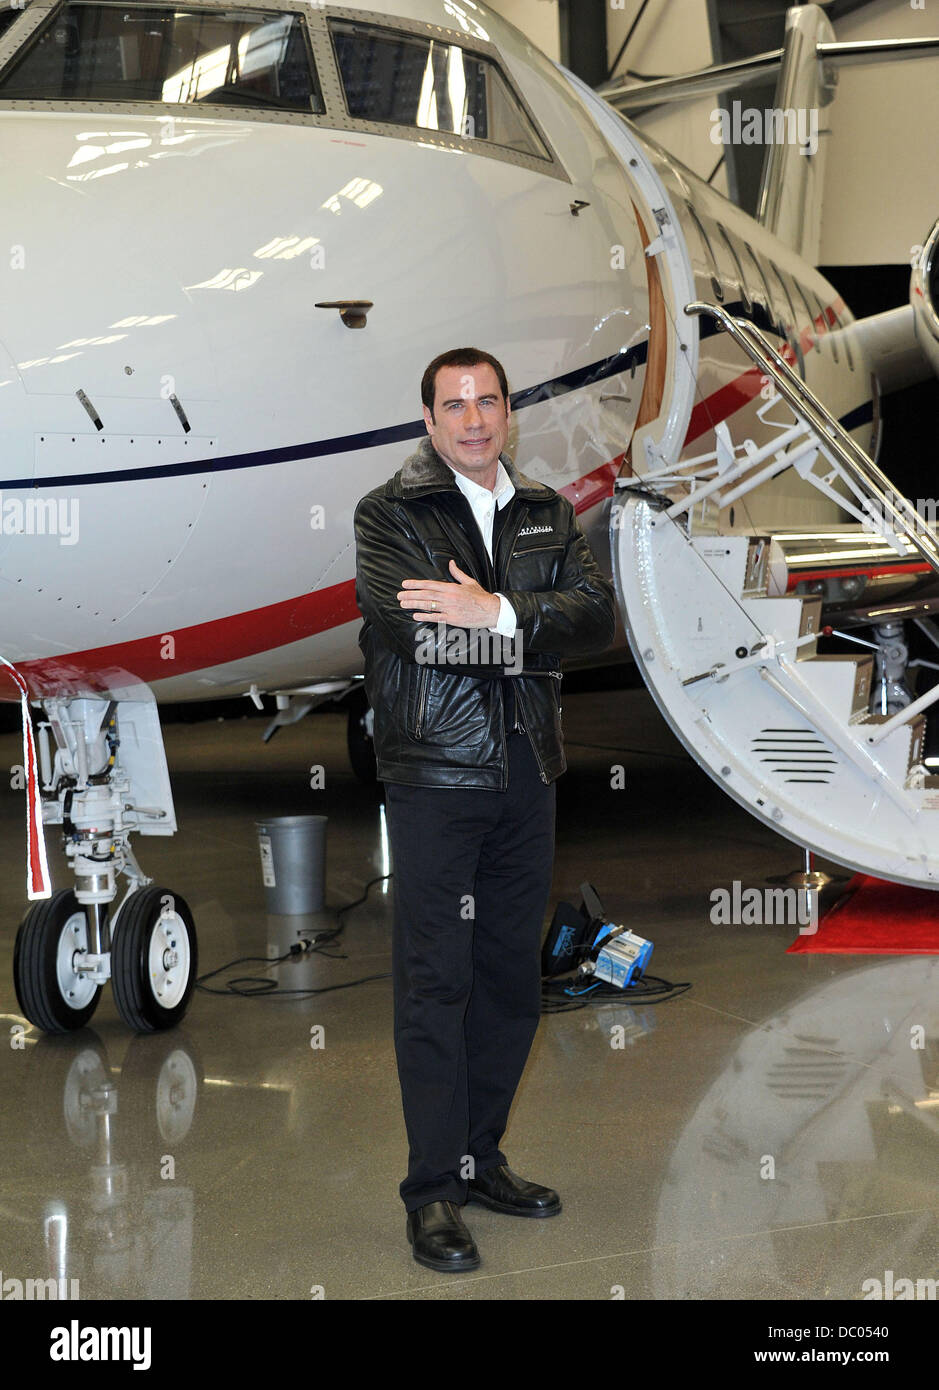 John Travolta  Bombardier Hollywood Private Jet Showcase with John Travolta Burbank, California - 20.09.11 Stock Photo